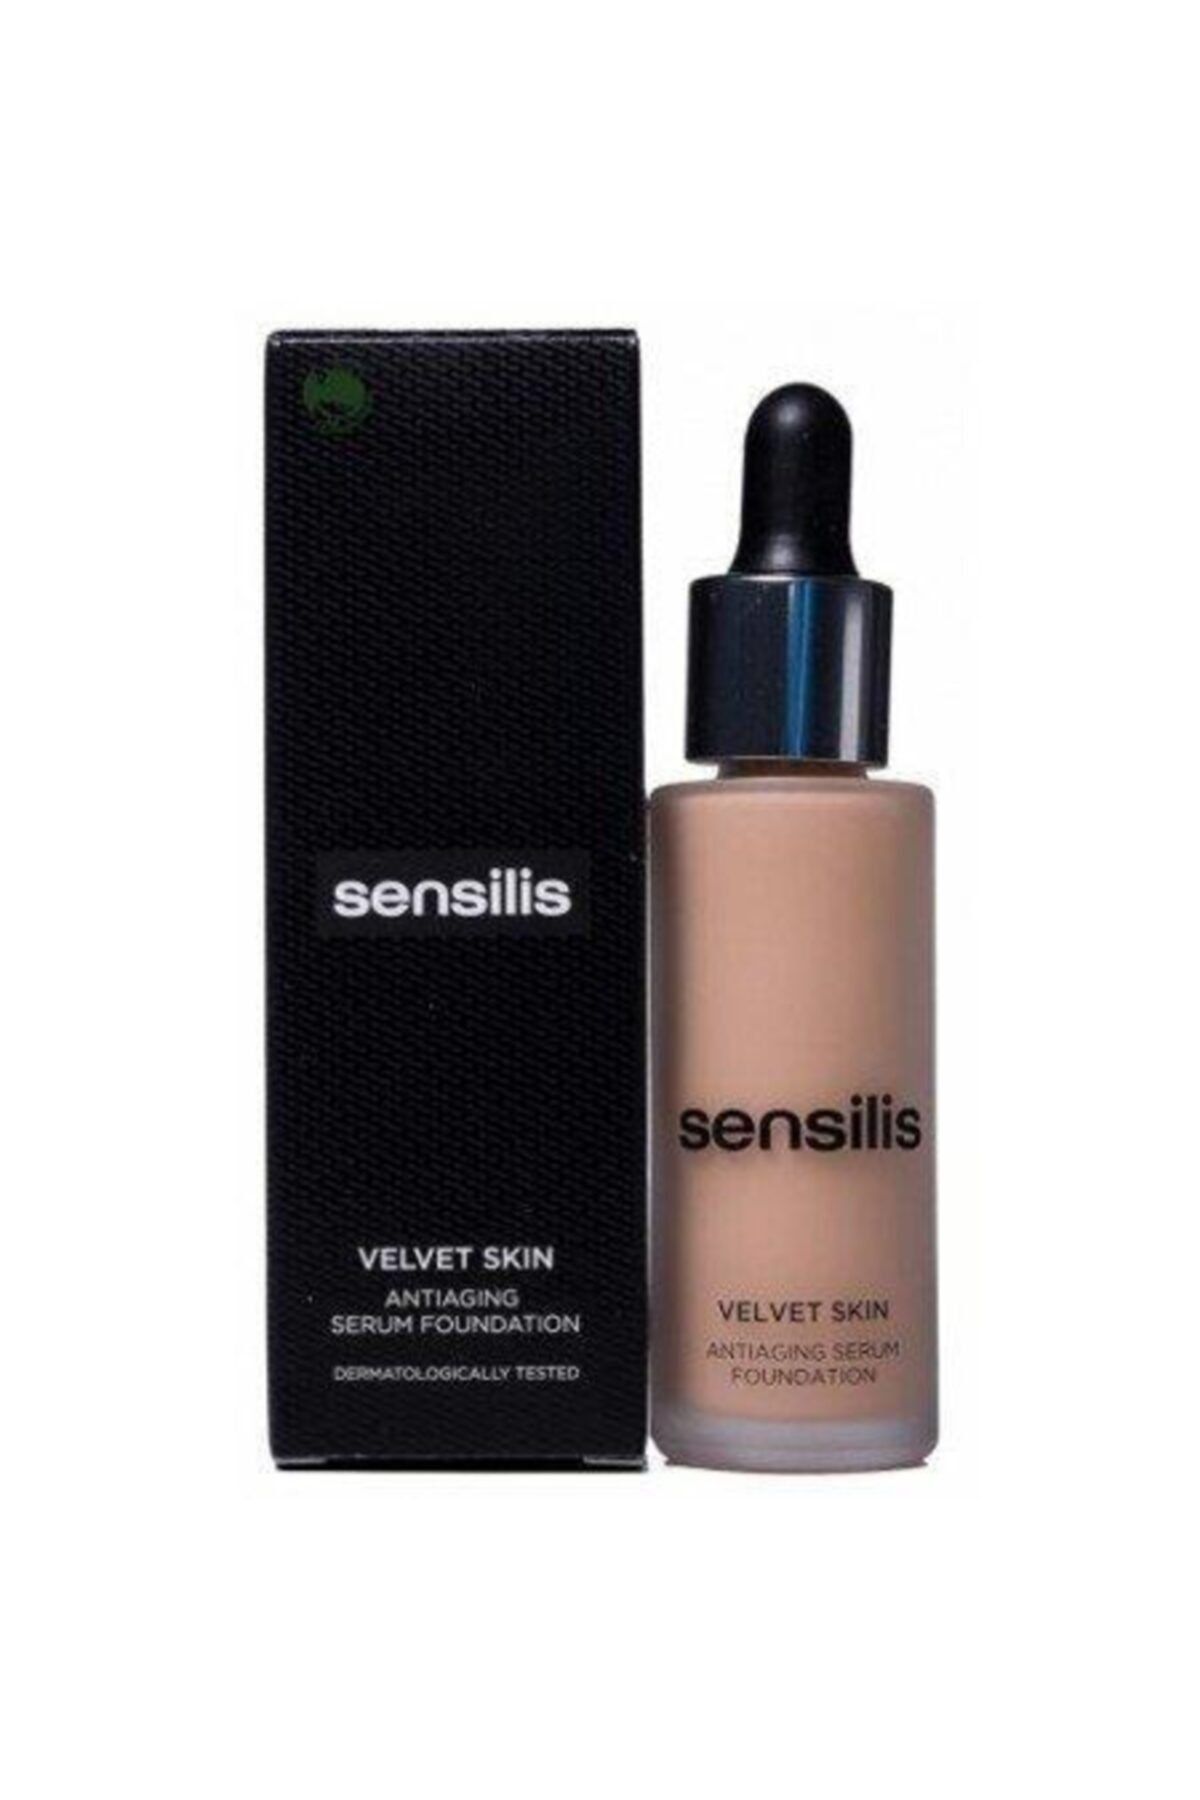 sensilis Fondöten - Velvet Skin Antiaging Serum Fondation 05 Cafe 8428749558002